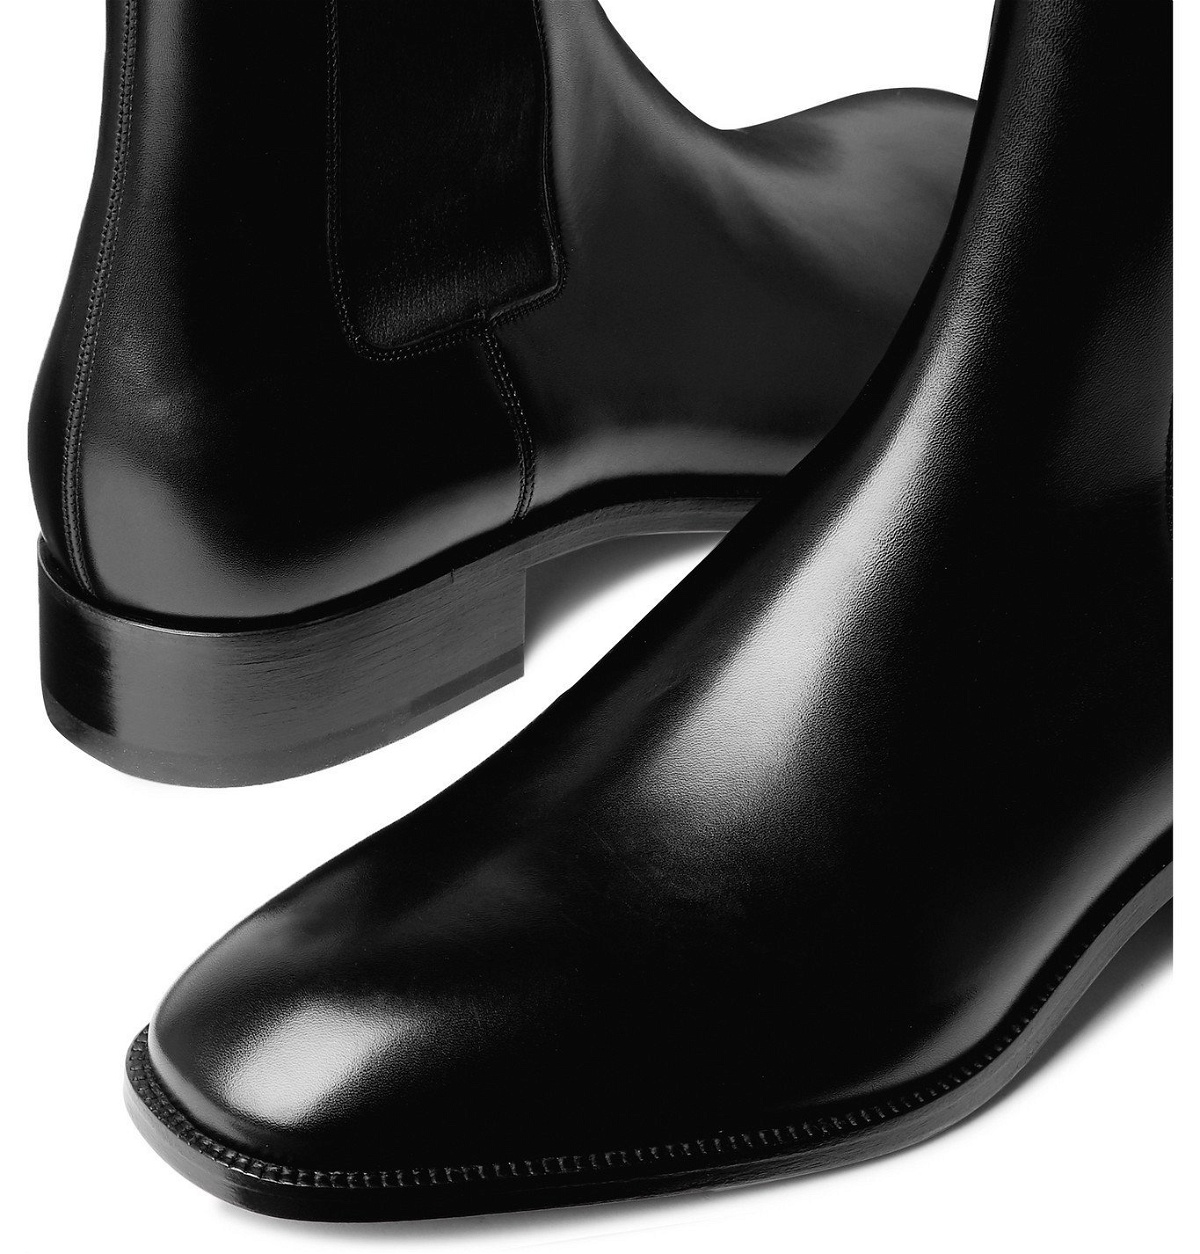 Christian Louboutin Samson Studded Leather Chelsea Boots - Men - Black Boots - EU 40